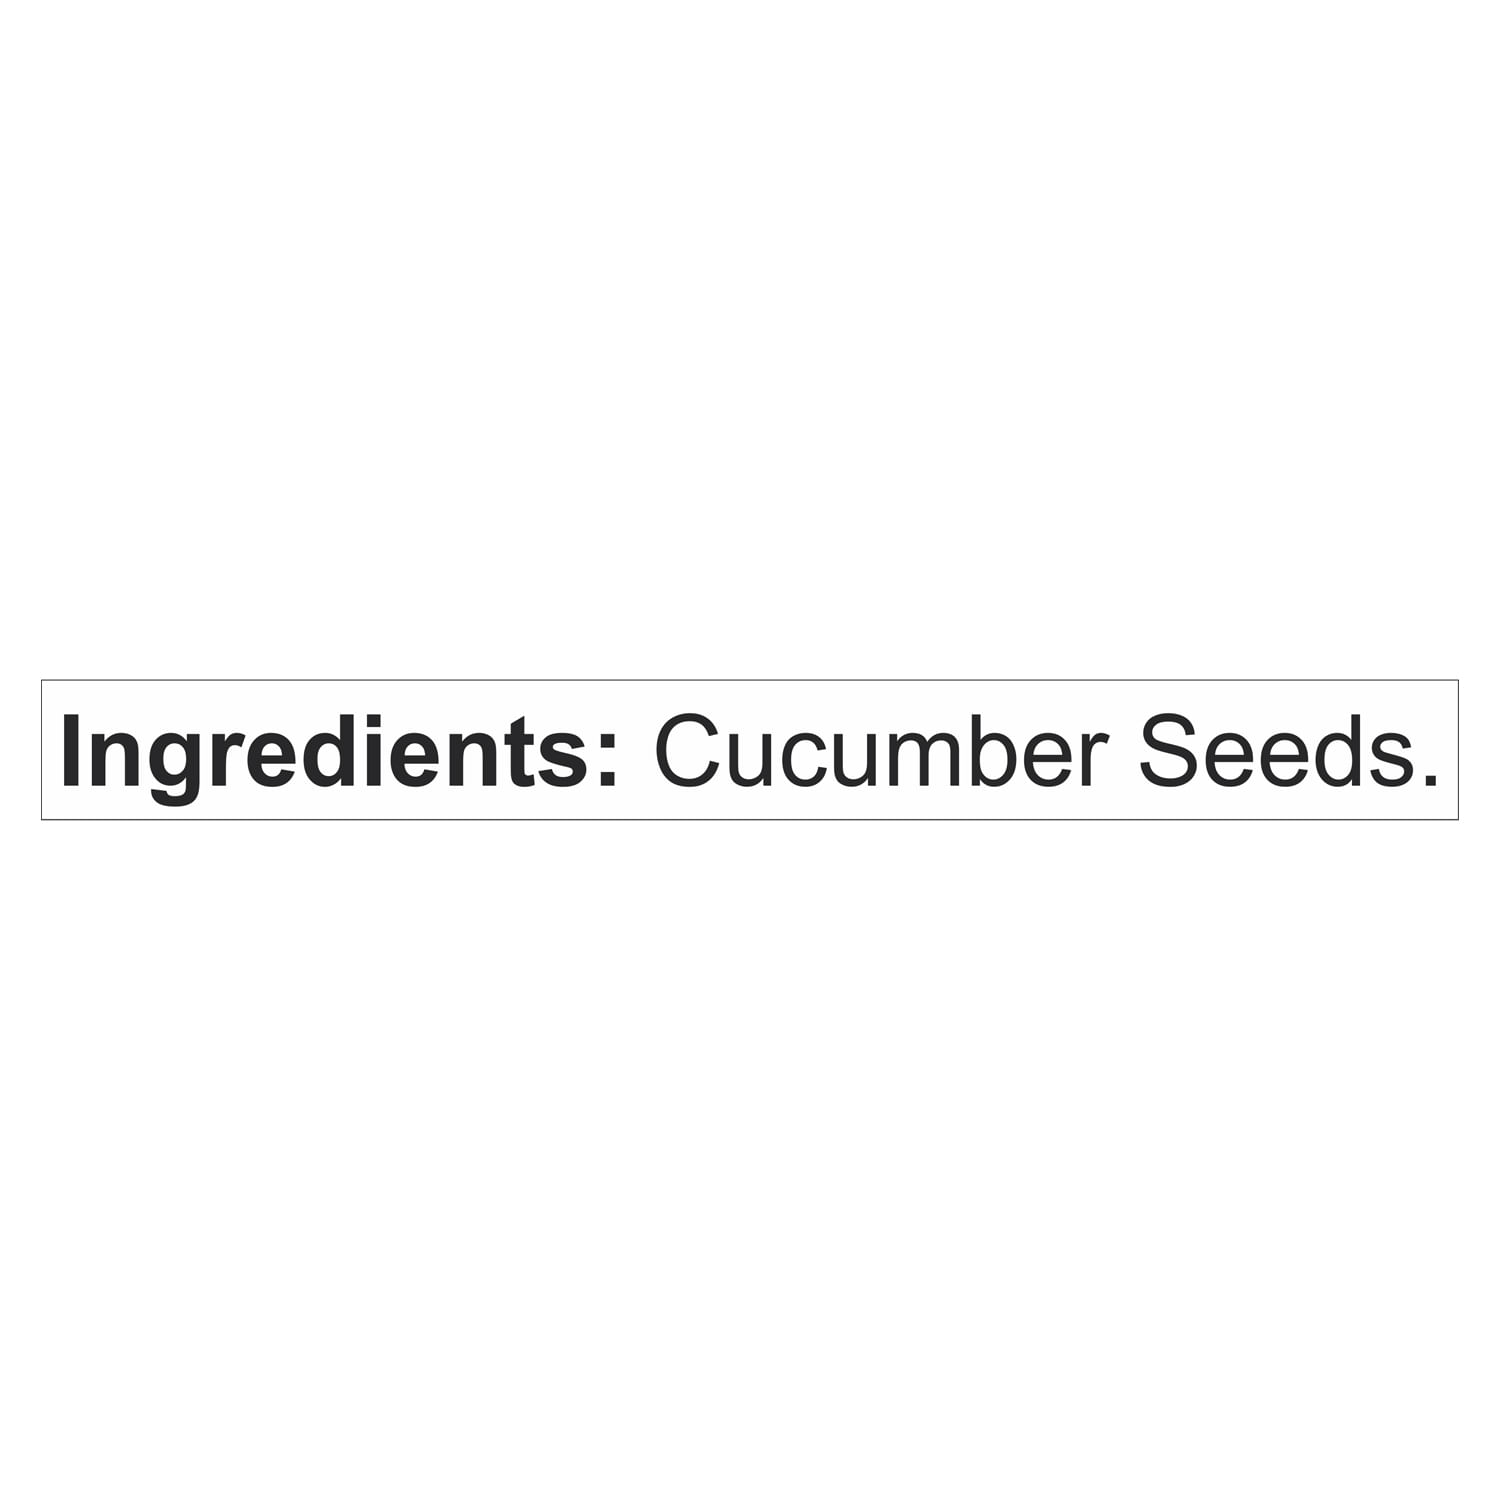 Nutraj Cucumber Seeds 800g (4 X 200g)